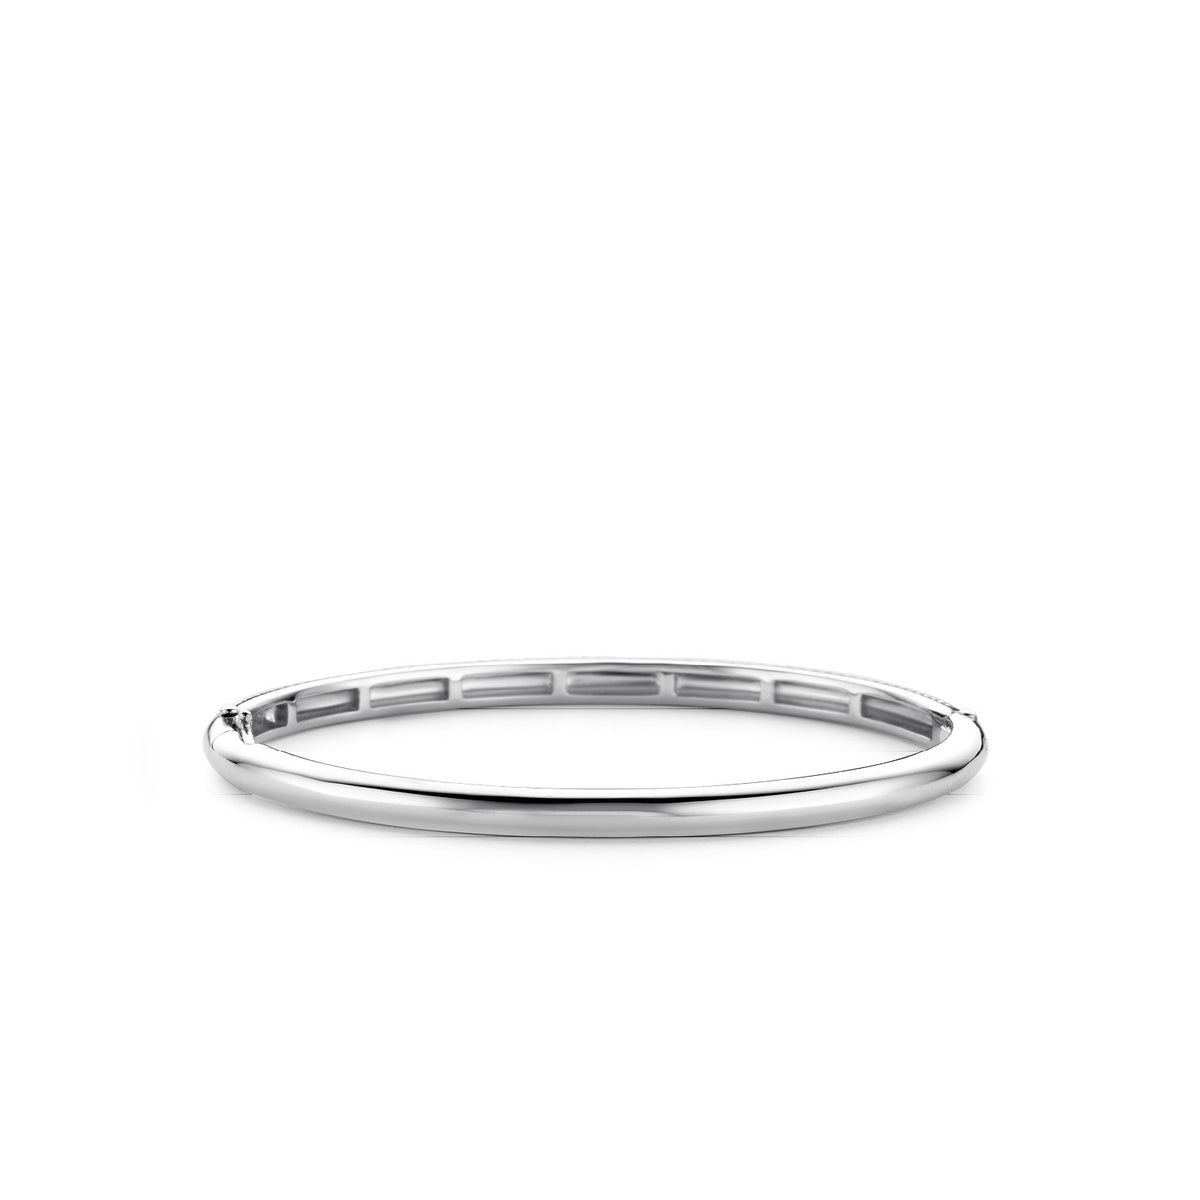 TI SENTO Sterling Silver Woven Design Hinged Bracelet